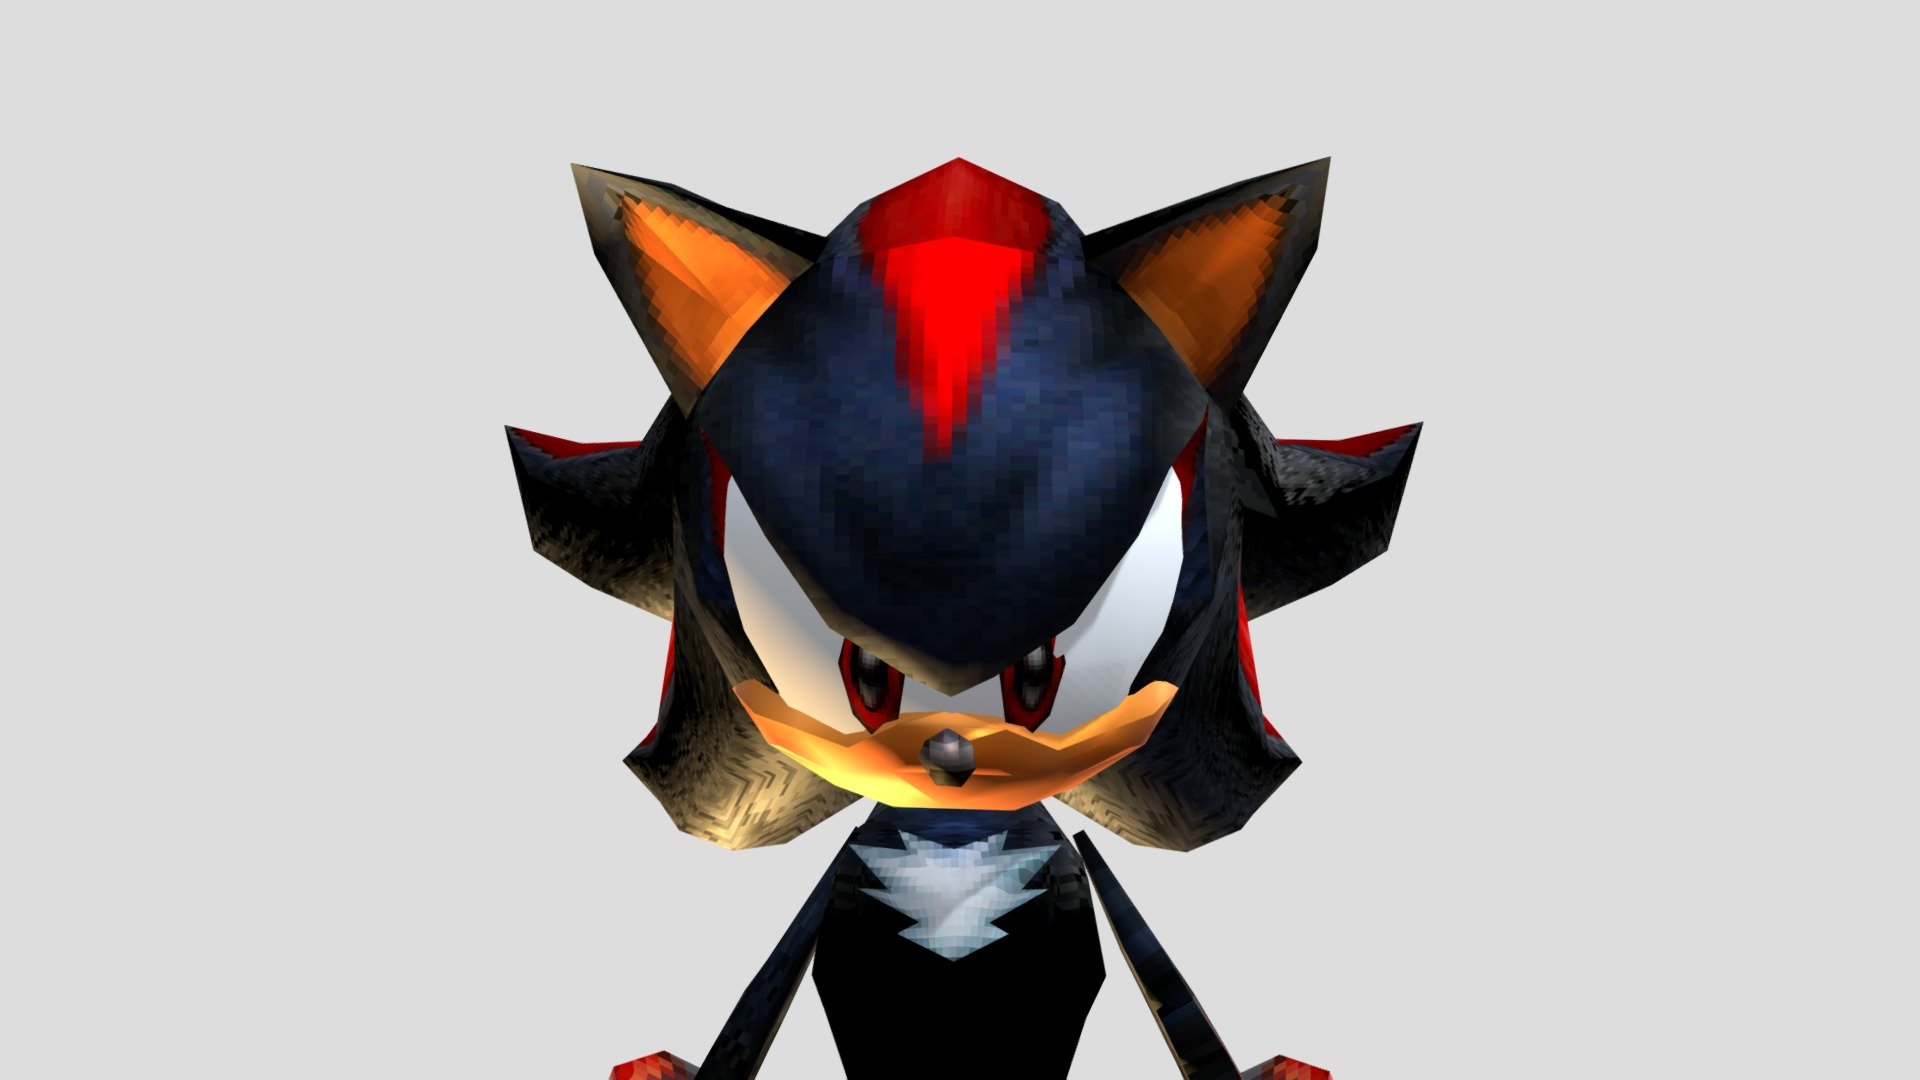 Shadow HD Model [Sonic Adventure 2] [Mods]